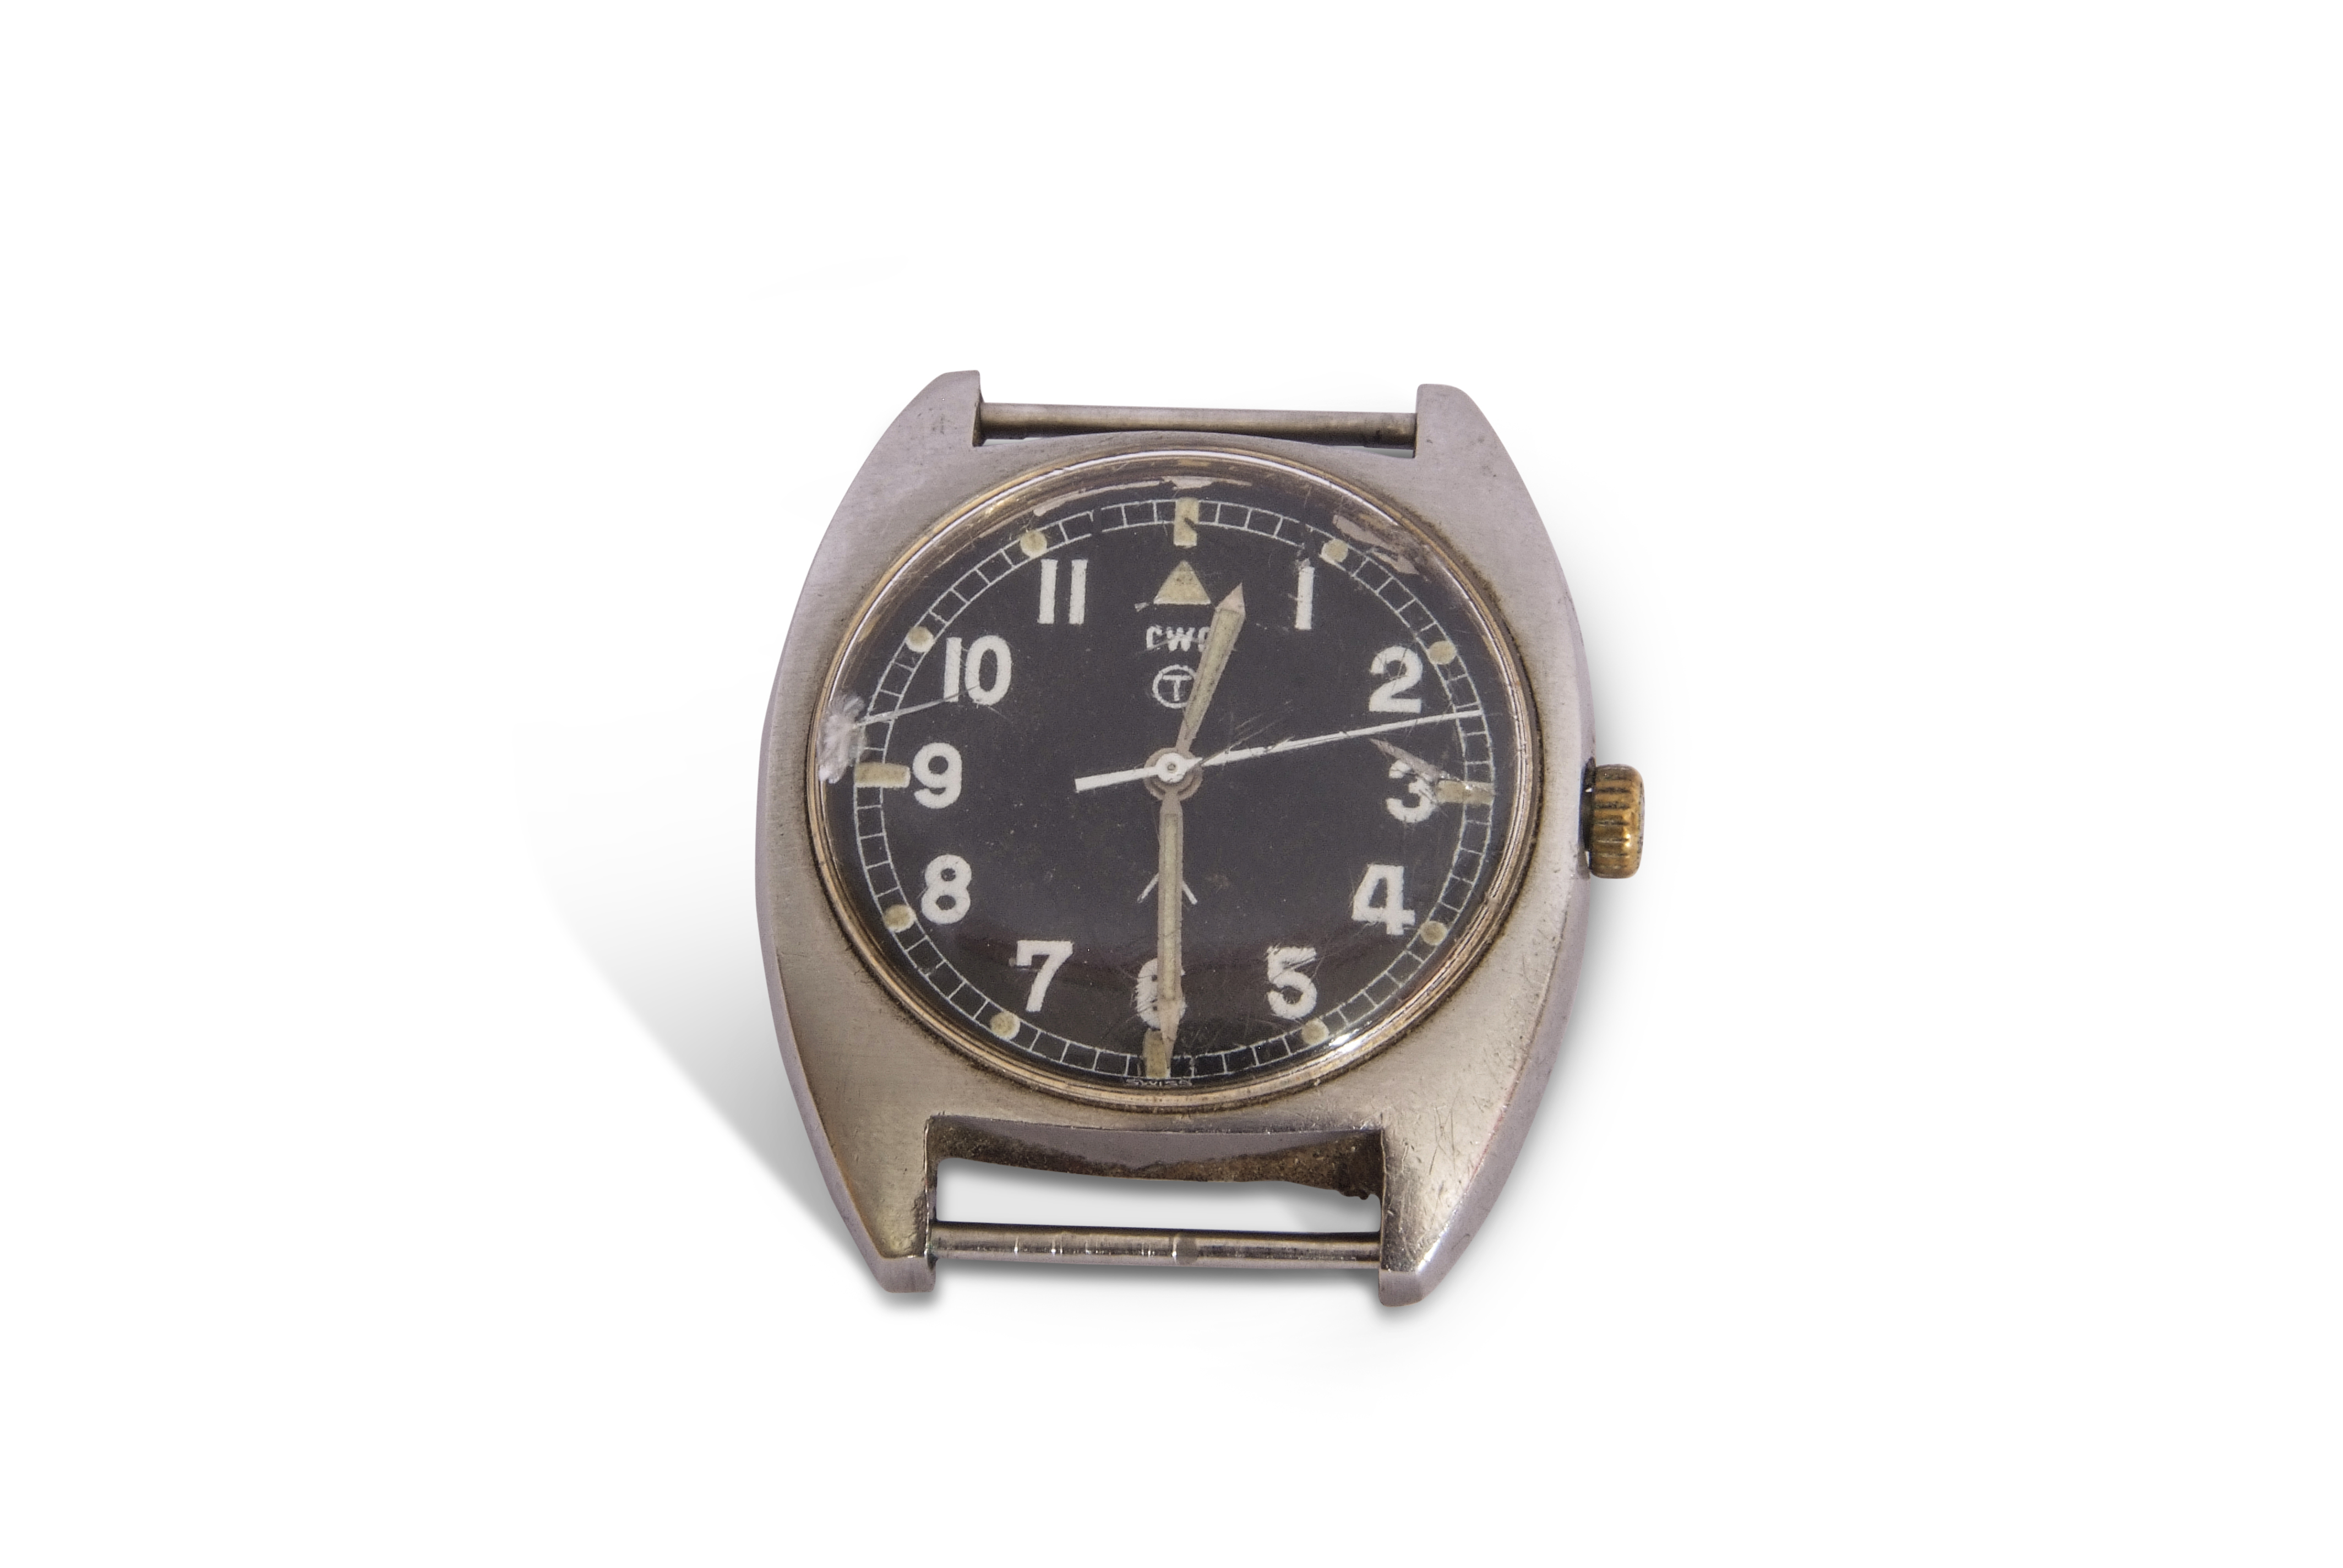 CWC Military steel wrist watch dated verso '76, having luminous hands, luminous Arabic numbers to